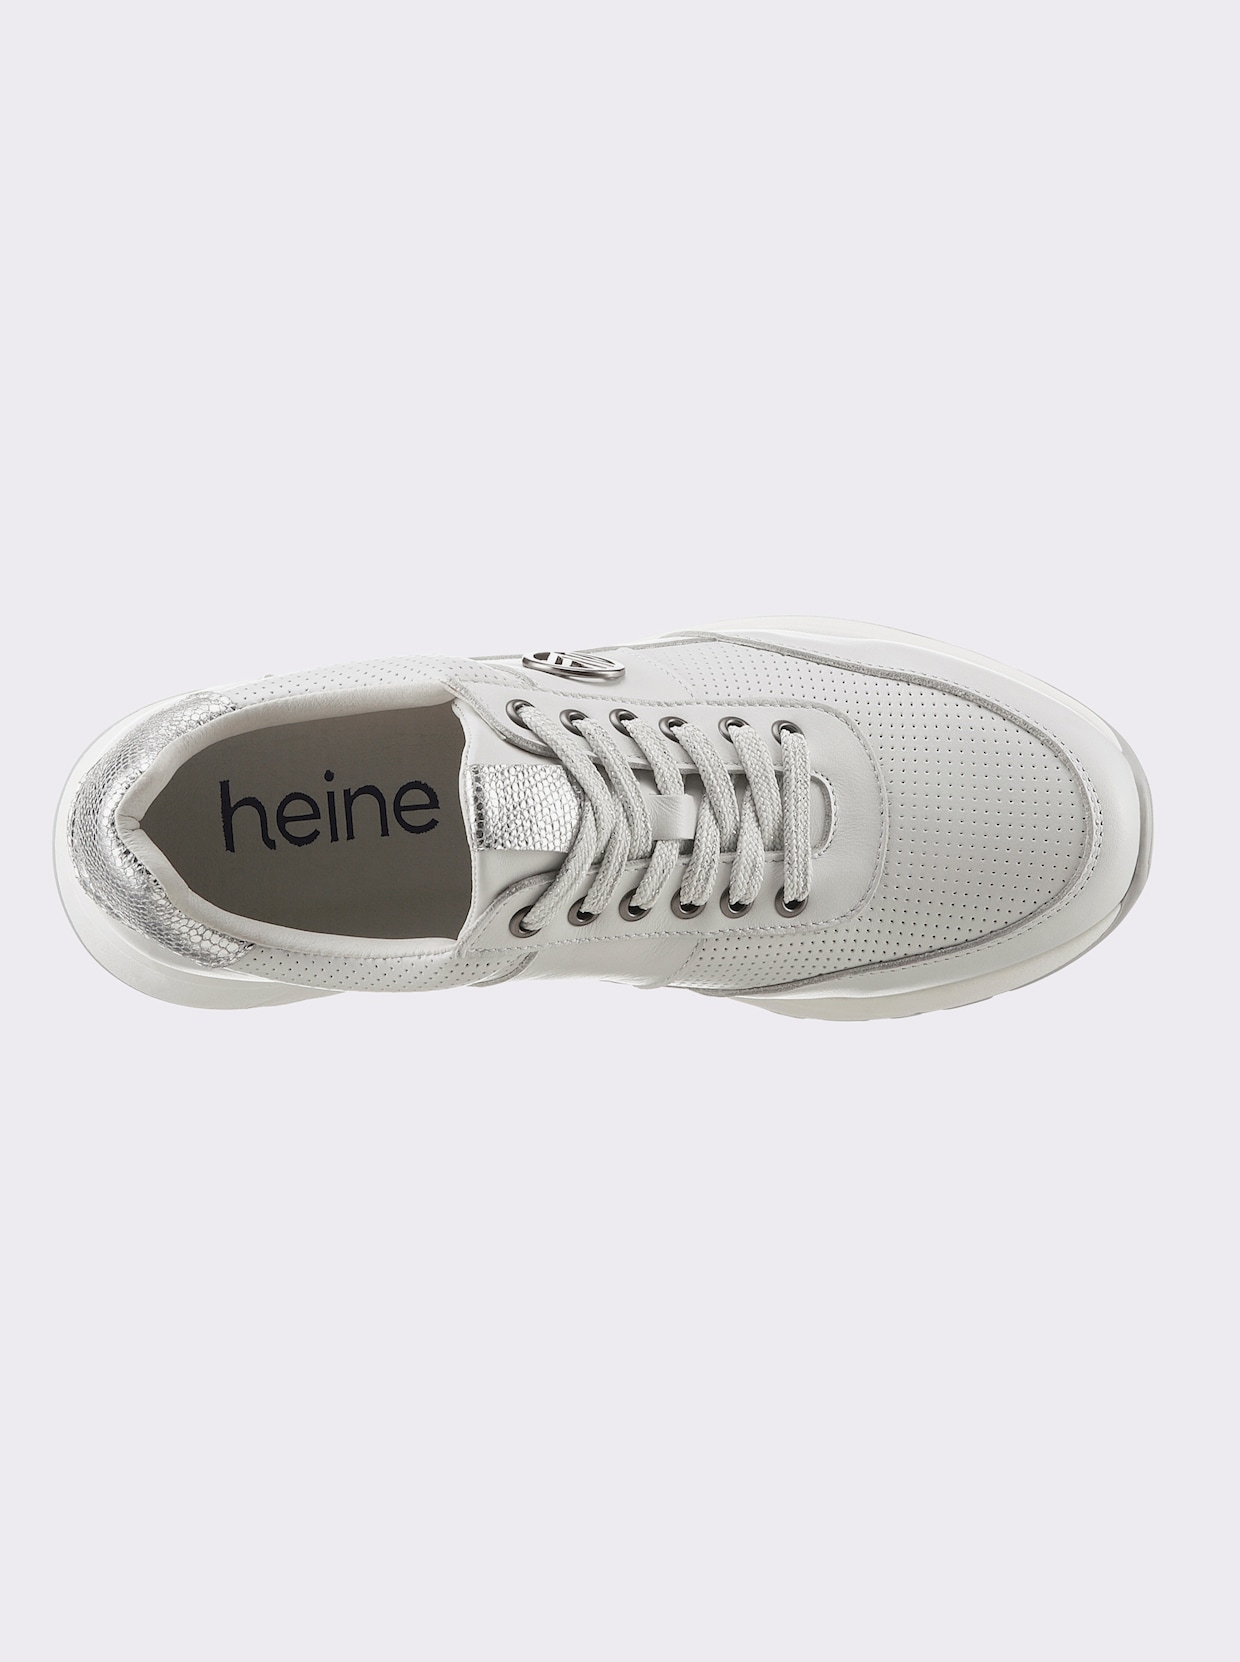 heine Sneaker - hellgrau